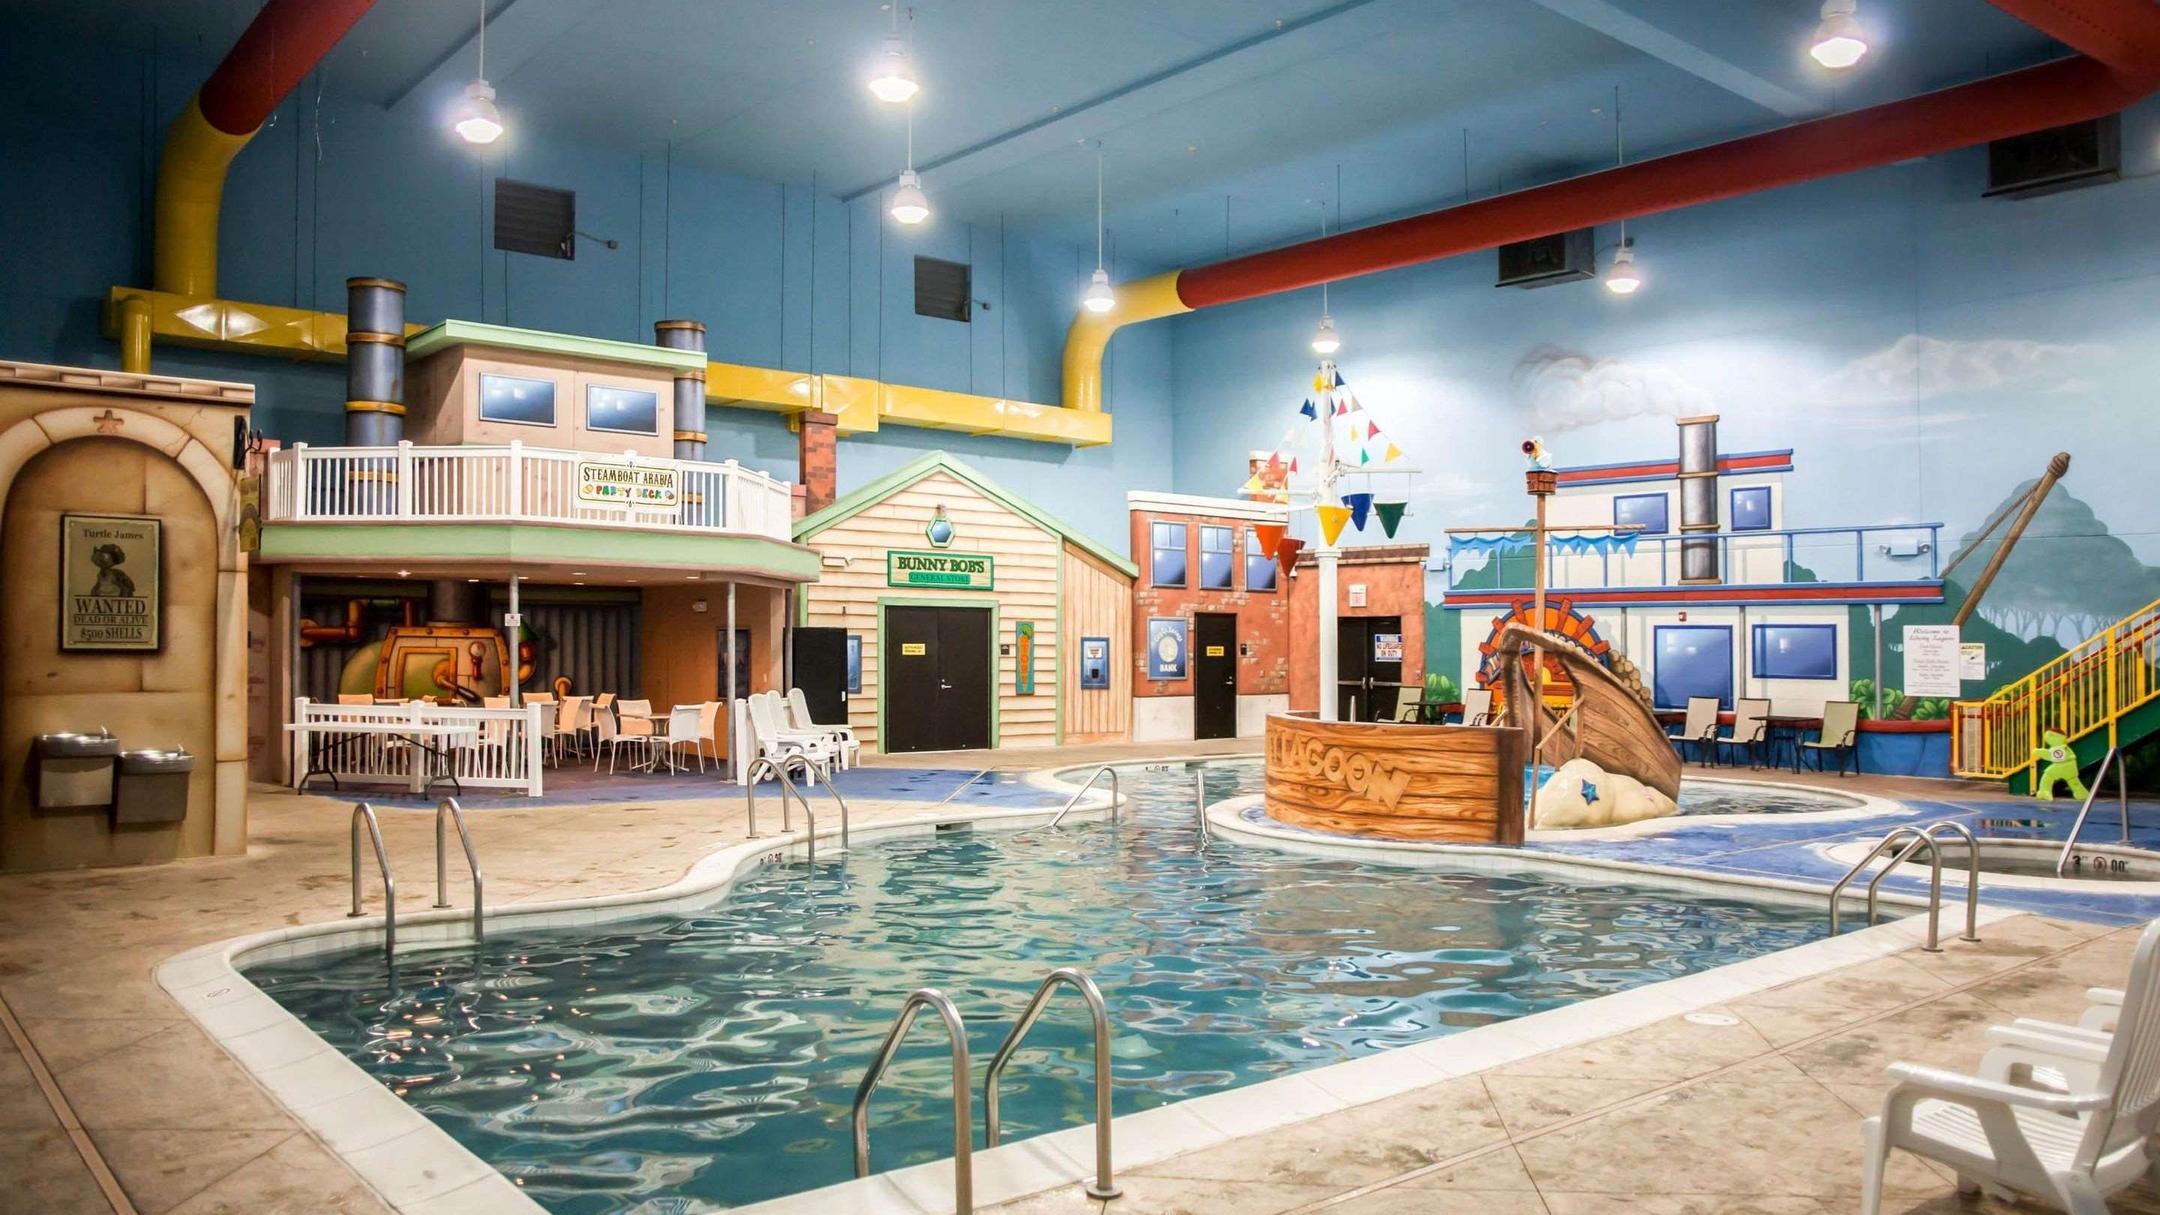 Sleep Inn & Suites Indoor Waterpark, Liberty, MO, United States